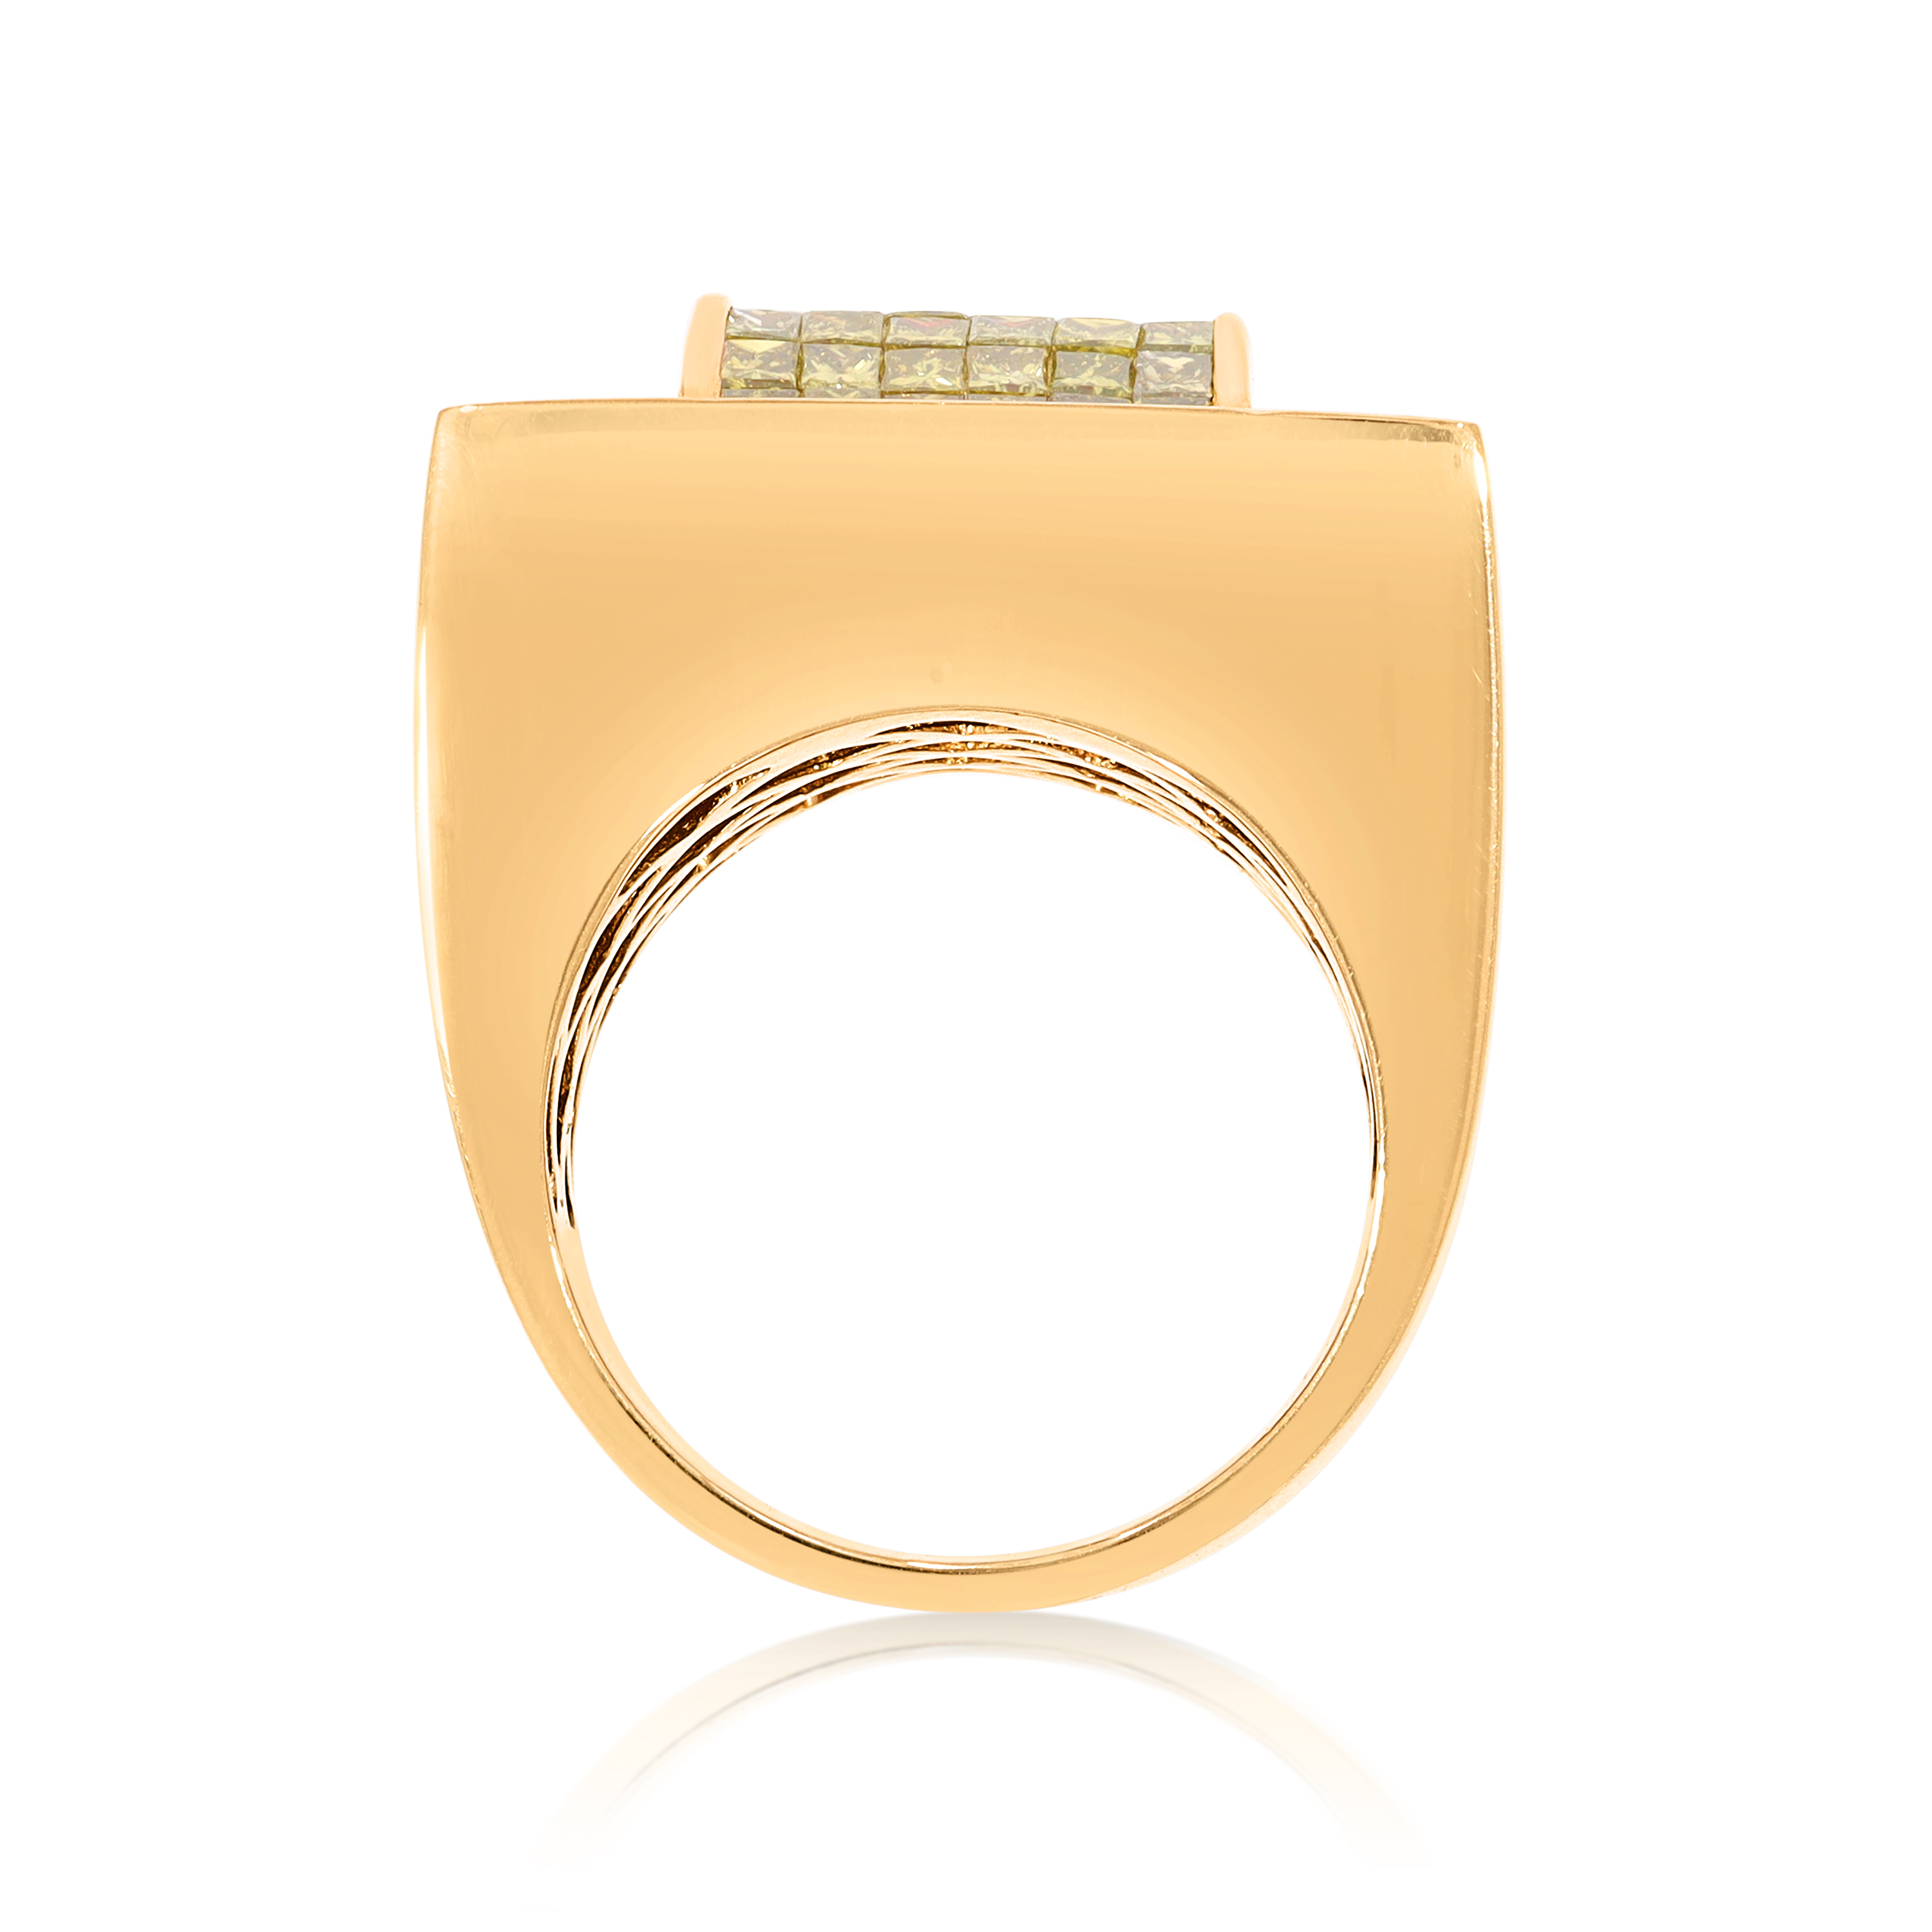 Princess Cut Canary Diamond Ring 5.65 ct. 14K Yellow Gold